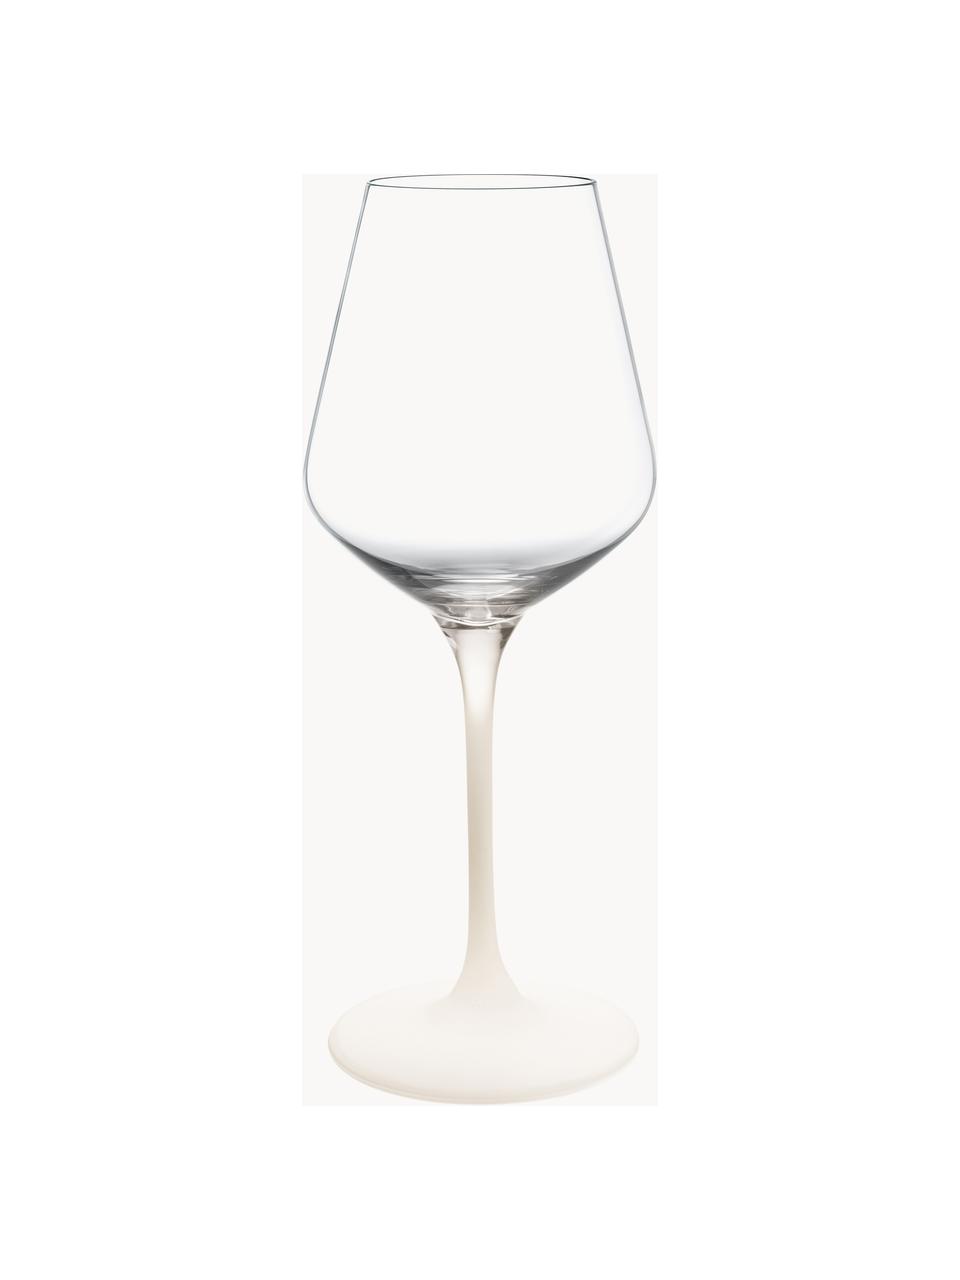 Kristallen witte wijnglazen Manufacture Rock, 4 stuks, Kristalglas, Transparant, wit, Ø 9 x H 23 cm, 410 ml